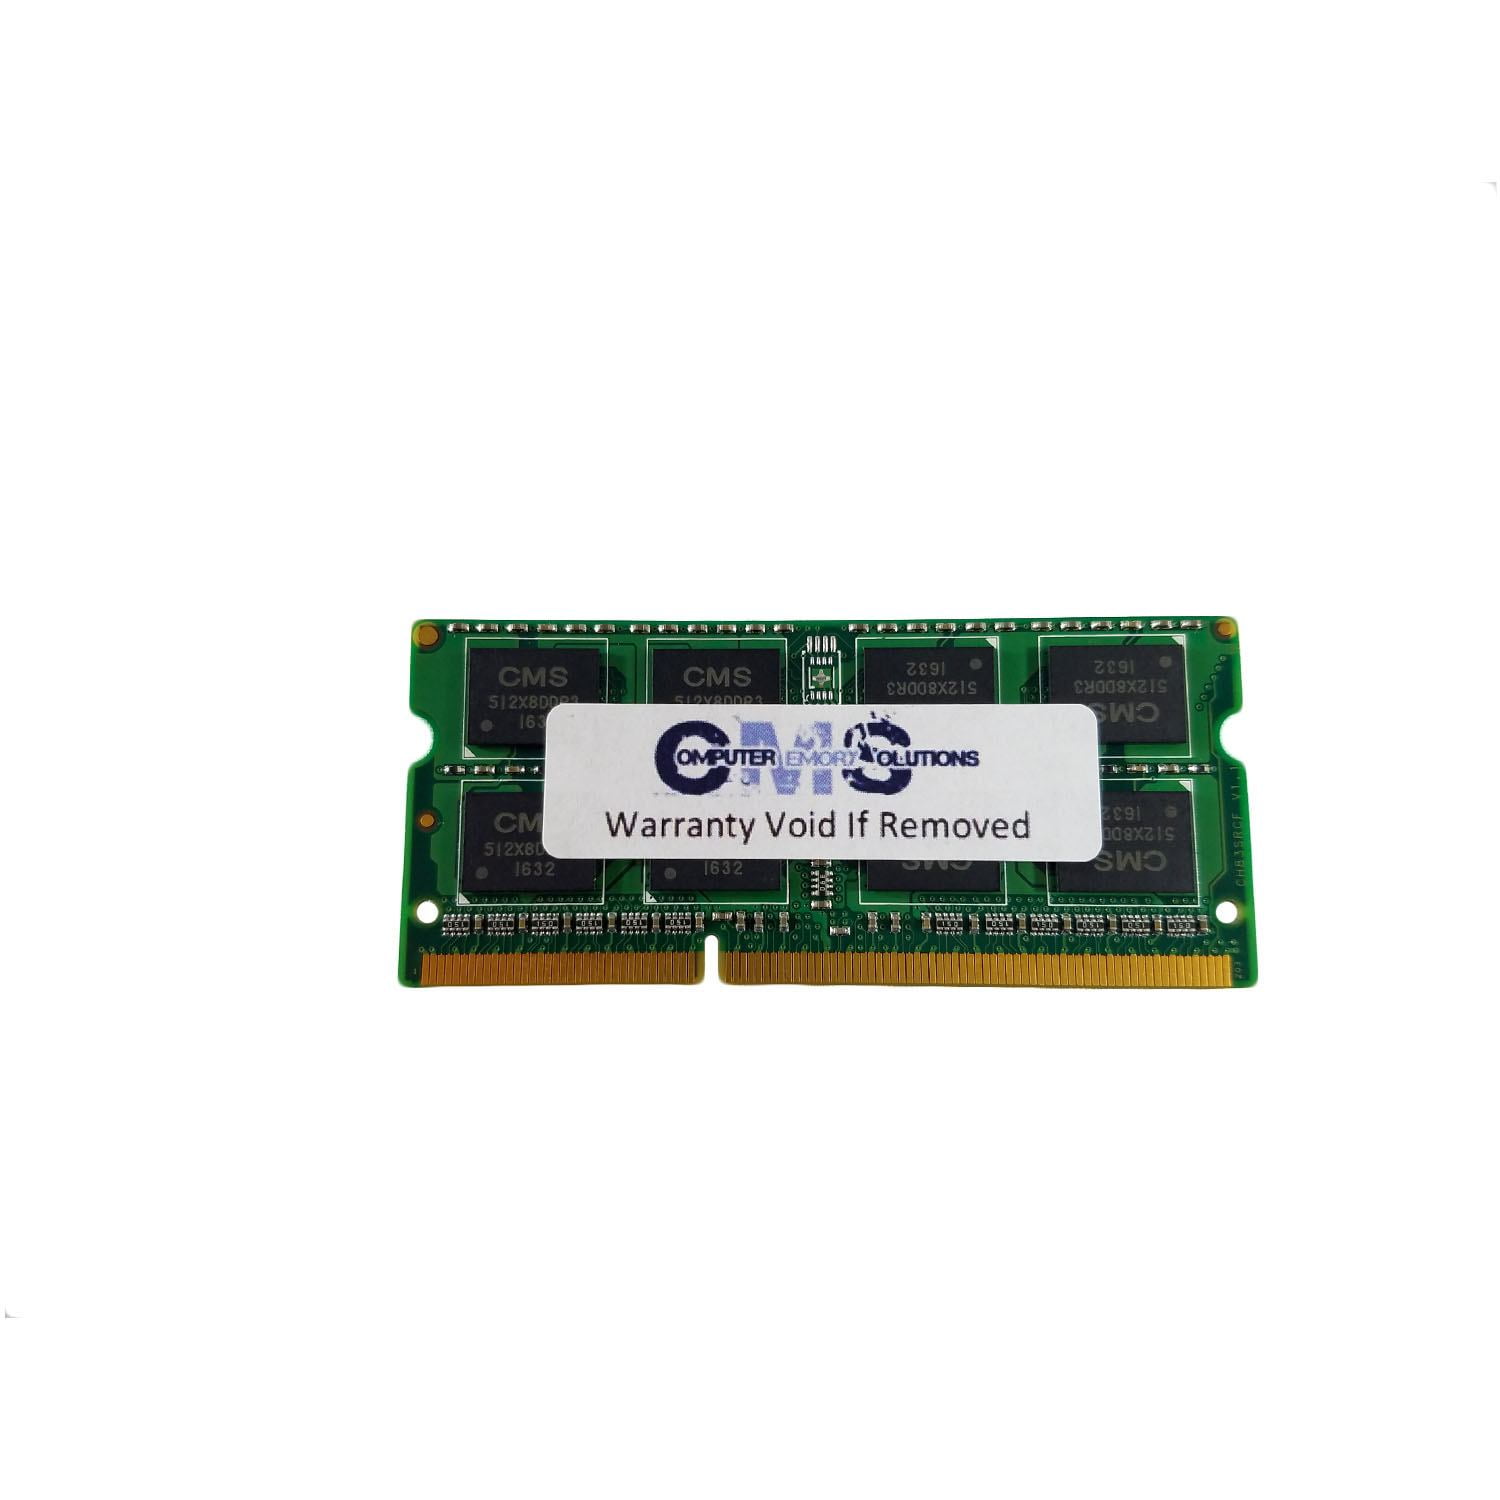 1X4GB DDR3 12800 1600MHz Non ECC SODIMM Memory Ram Compatible with Acer Aspire E Series Es1-571-Xxxx CMS 4GB A25 